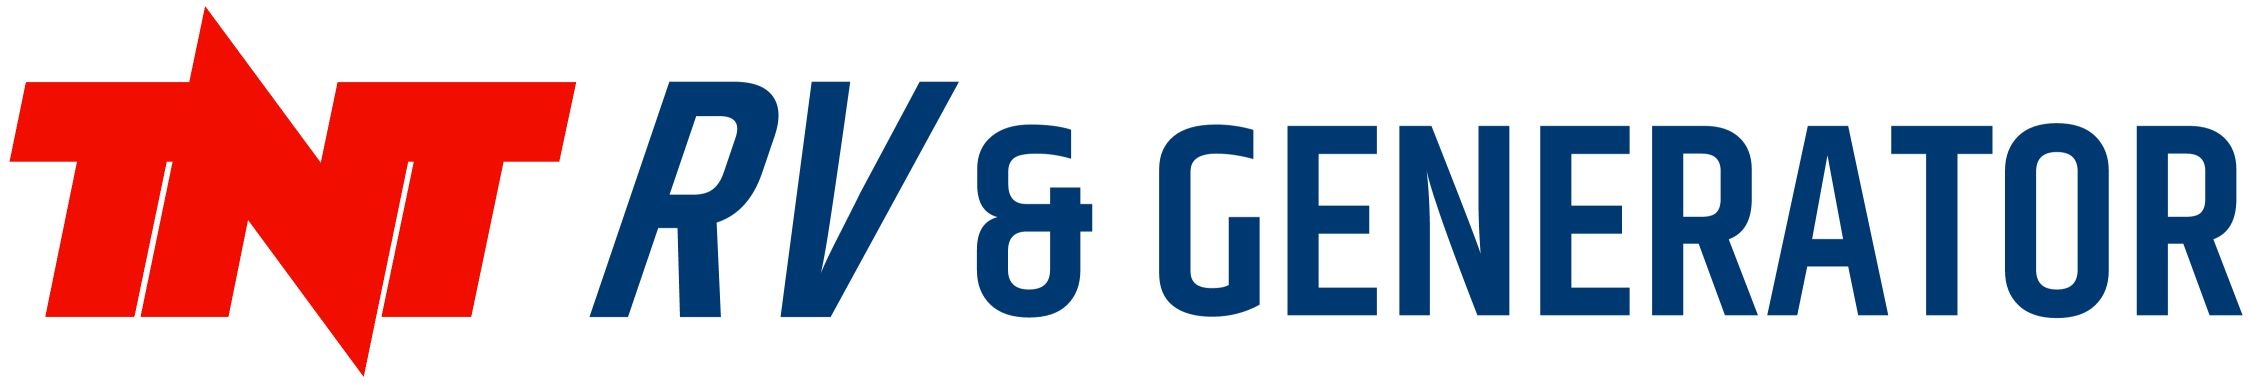 TNT RV and Generator Services Logo